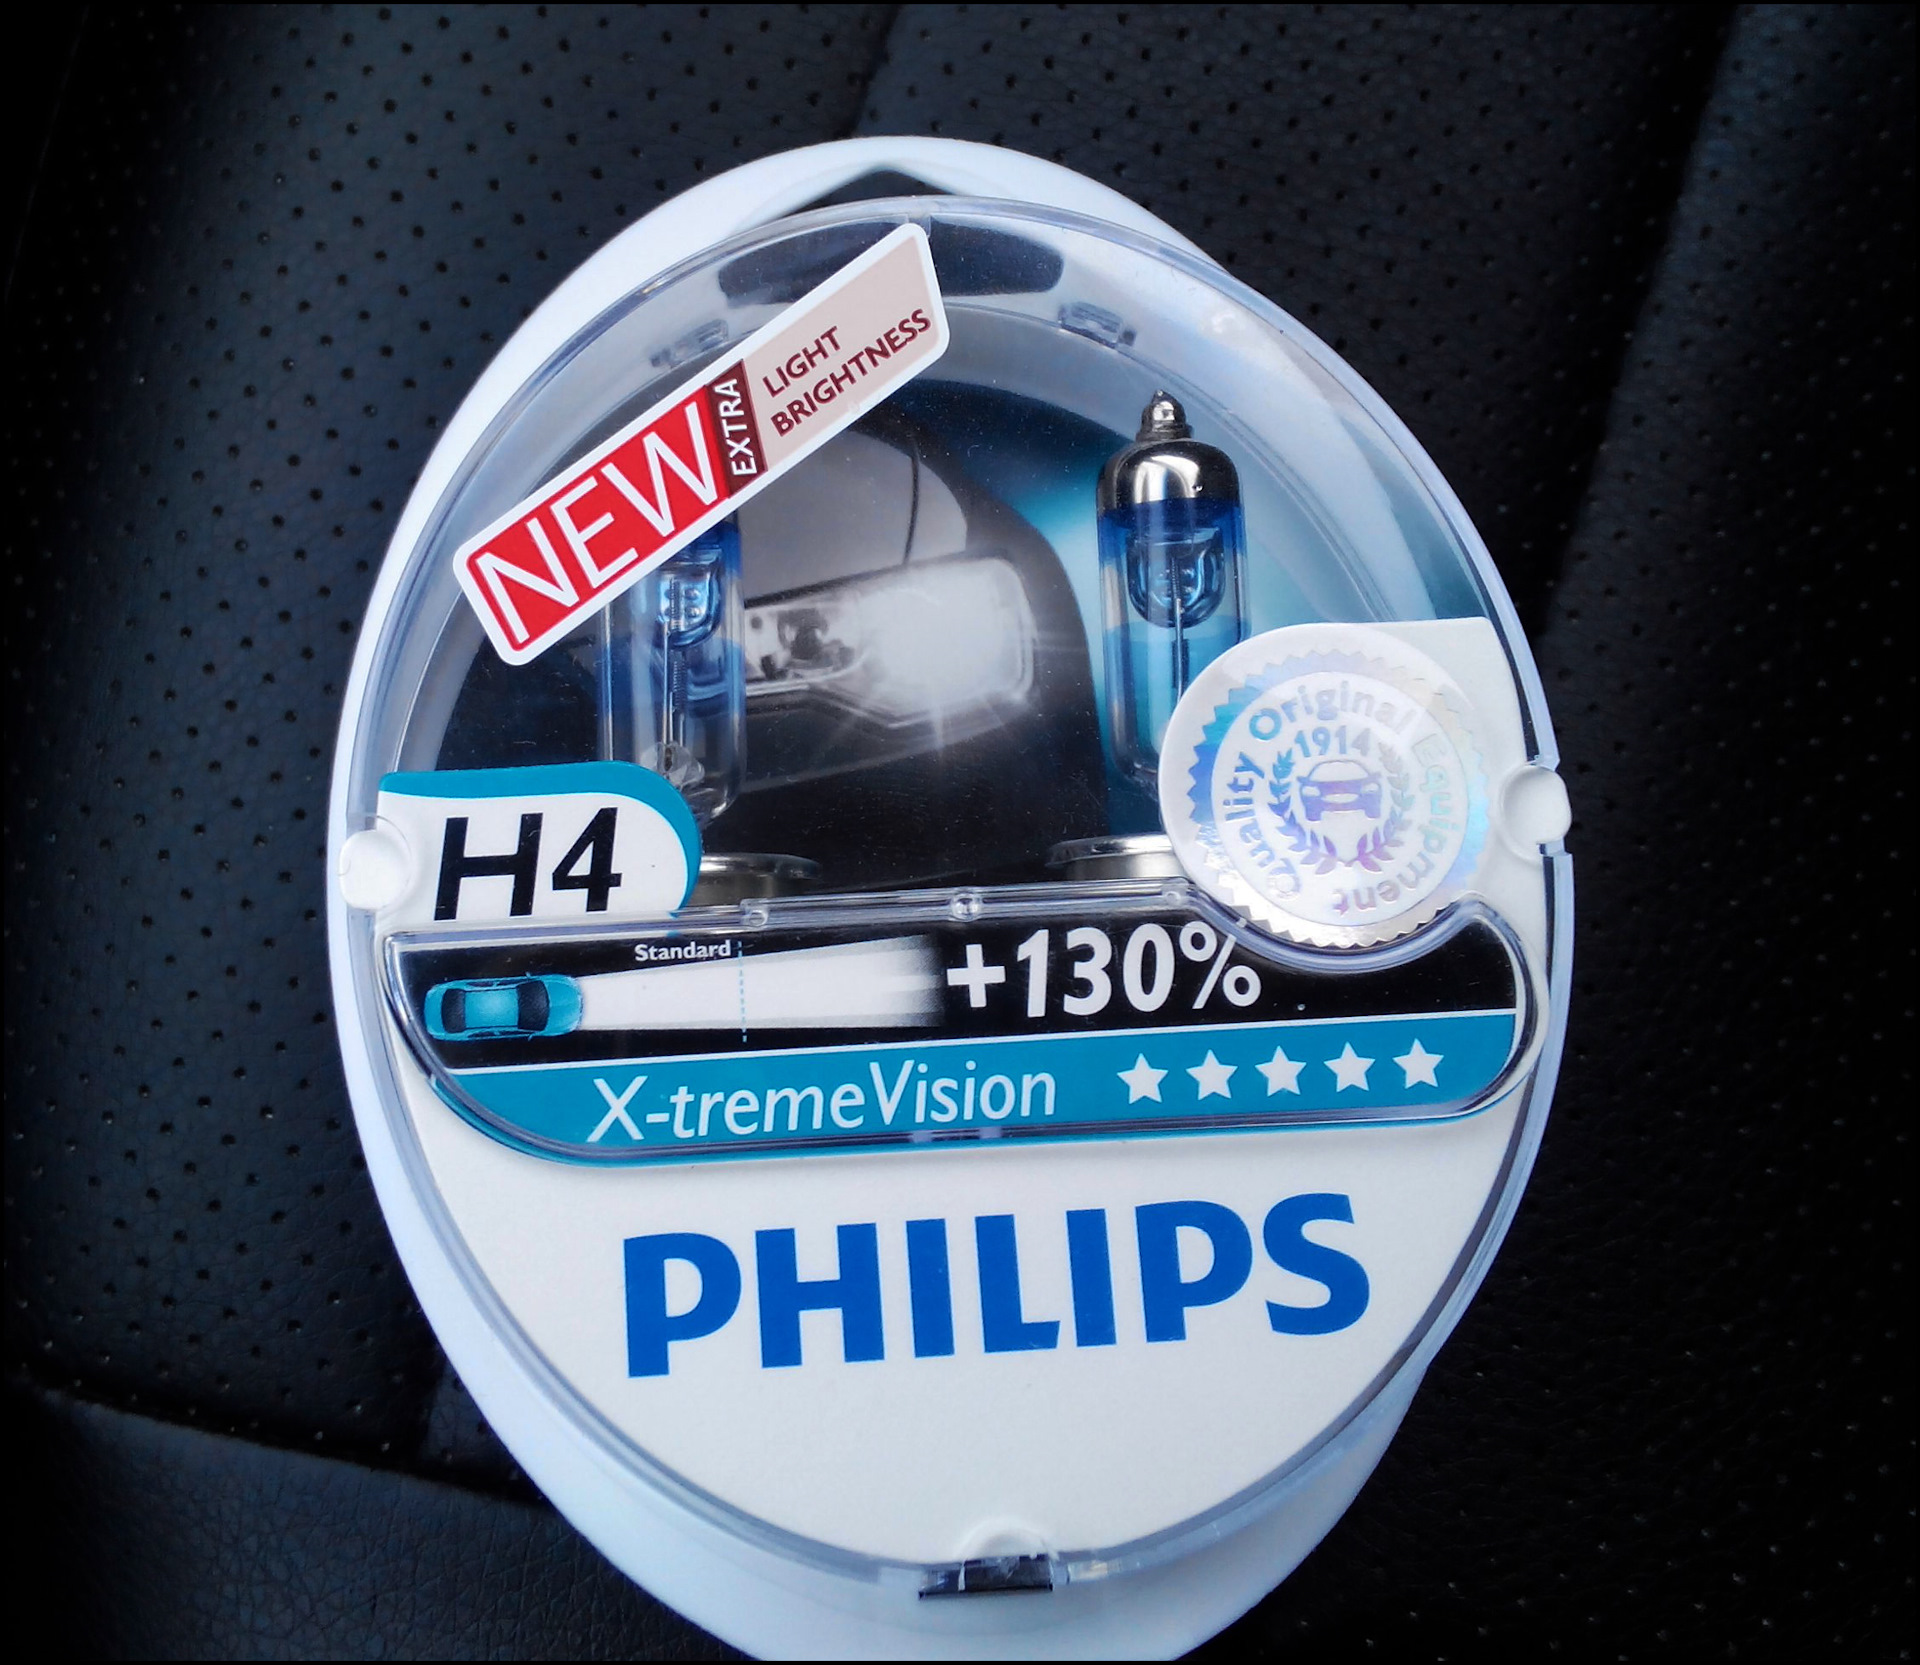 Philips h4 купить. Лампа н4 Филипс +130. Лампочки Филипс h4 +130. Филипс экстрим Вижн +130 h4. Philips x-treme Vision +130 h4.